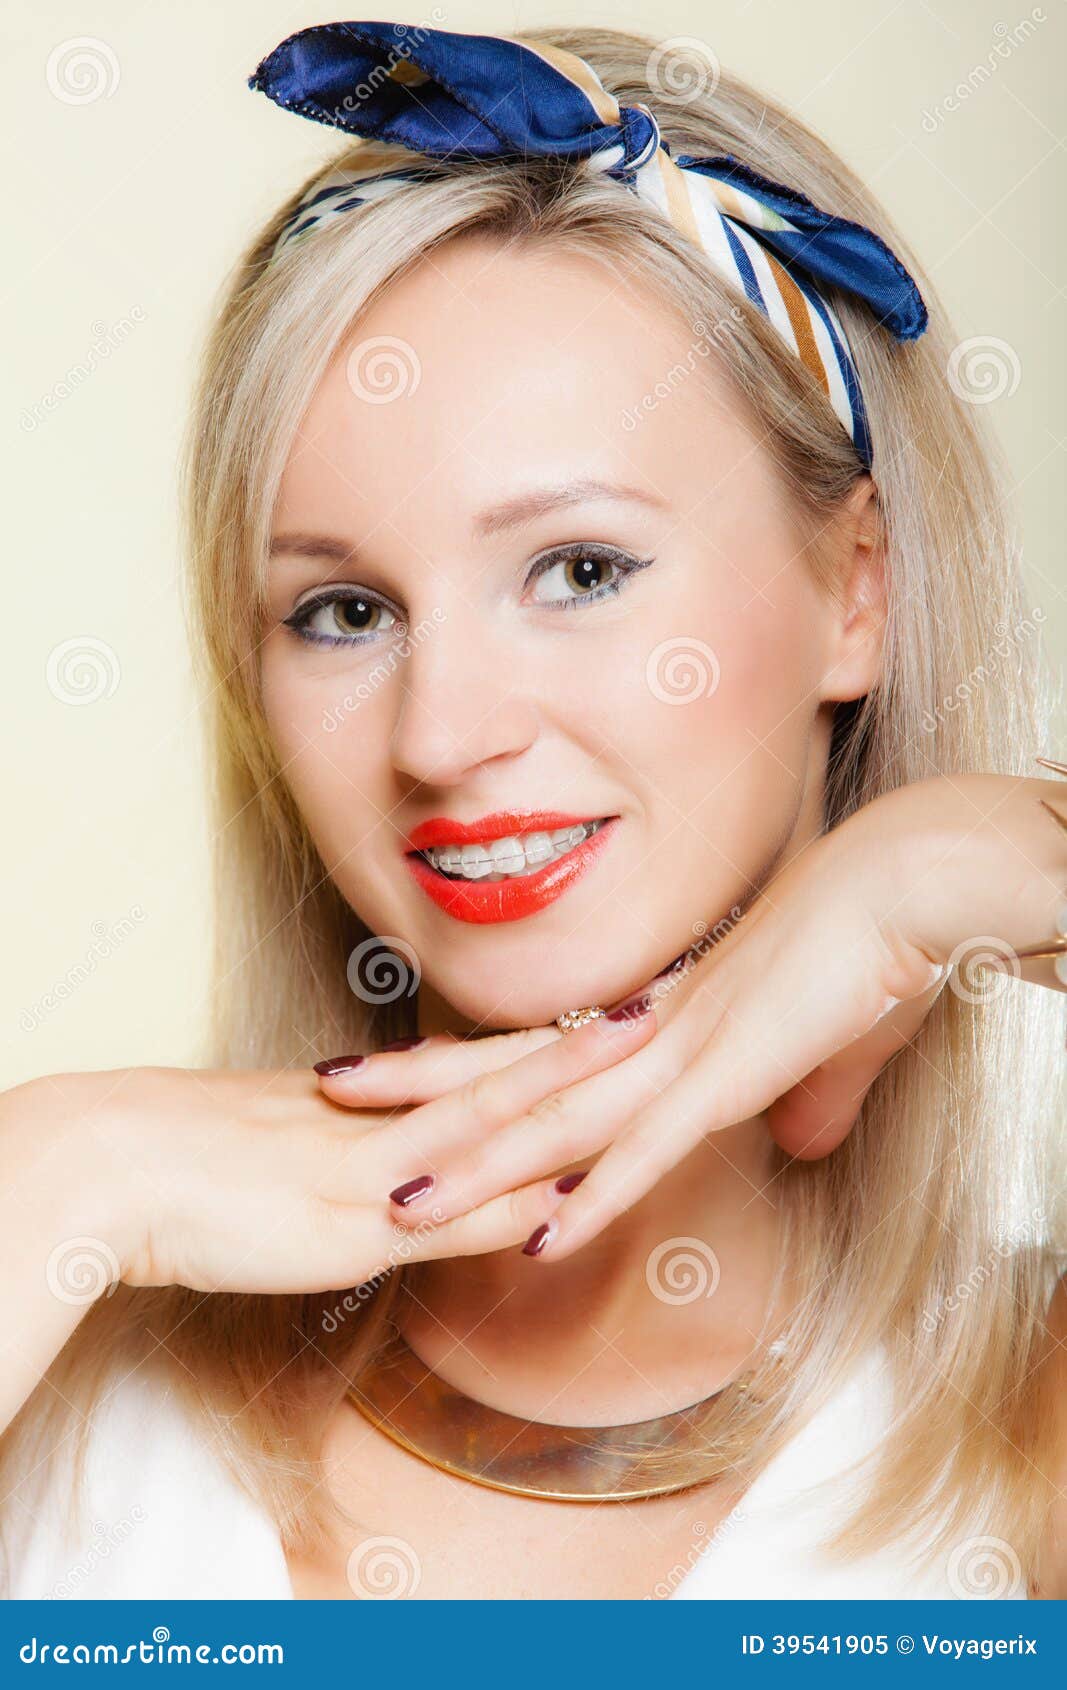 Blonde girl with braces cum facial